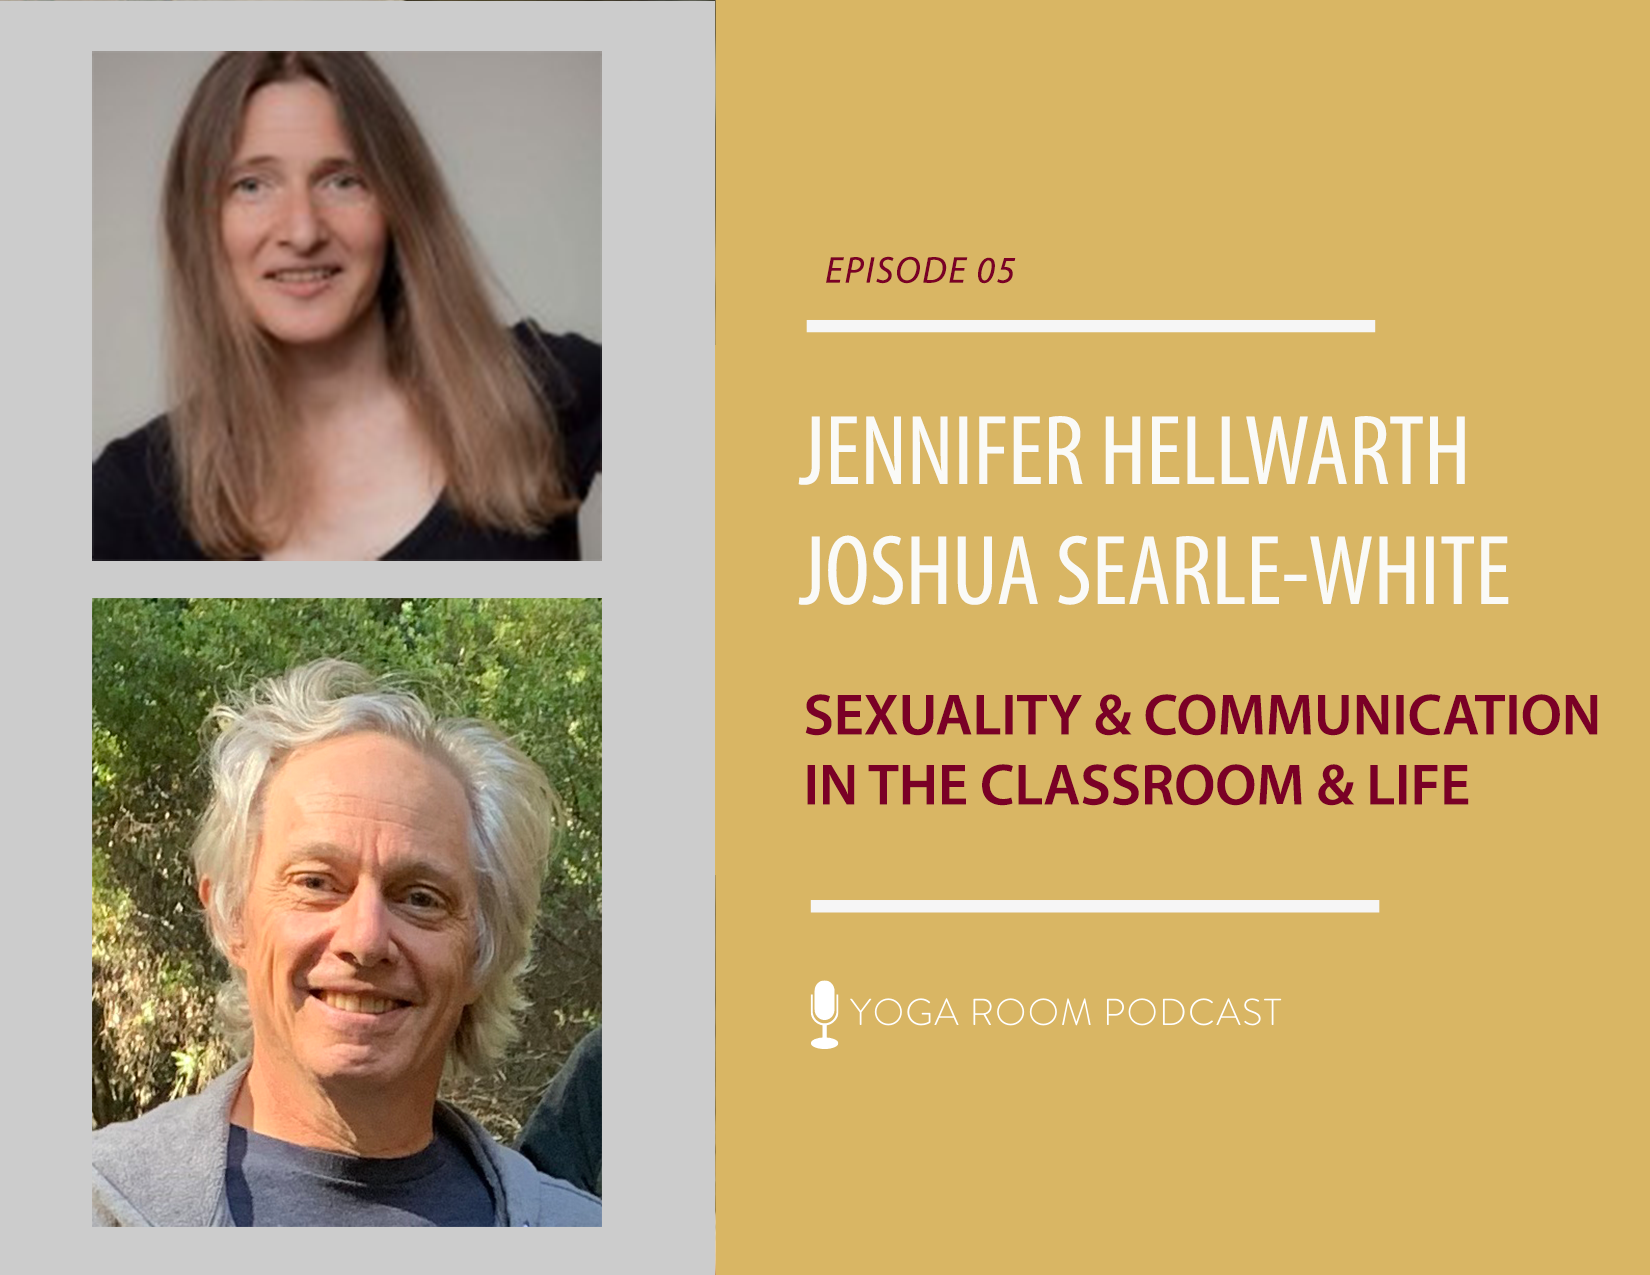 Yoga Room Episode 5 with Jennifer Hellwarth & Joshua Searle-White